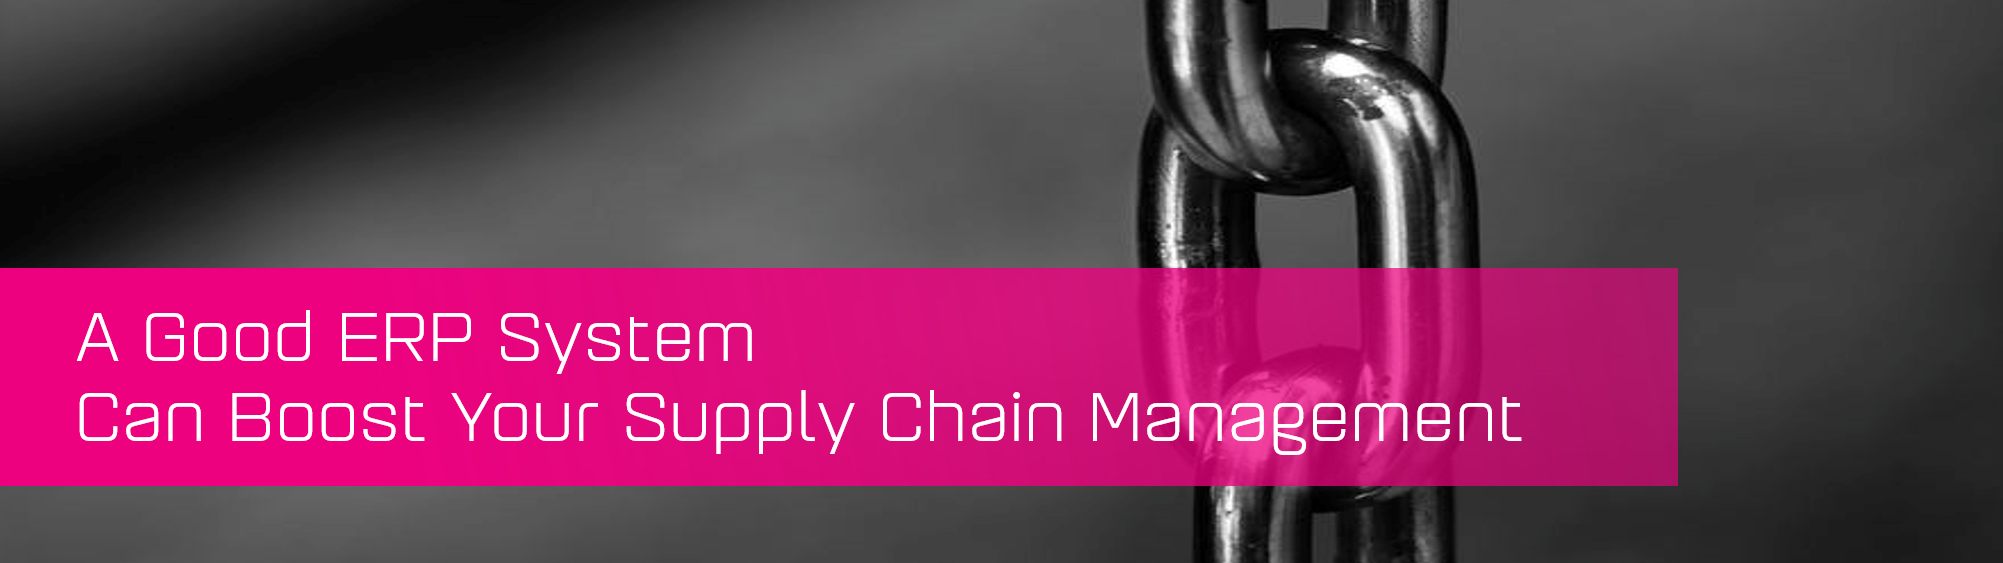 KCS SA - Blog - A Good ERP System boost Supply Chain banner